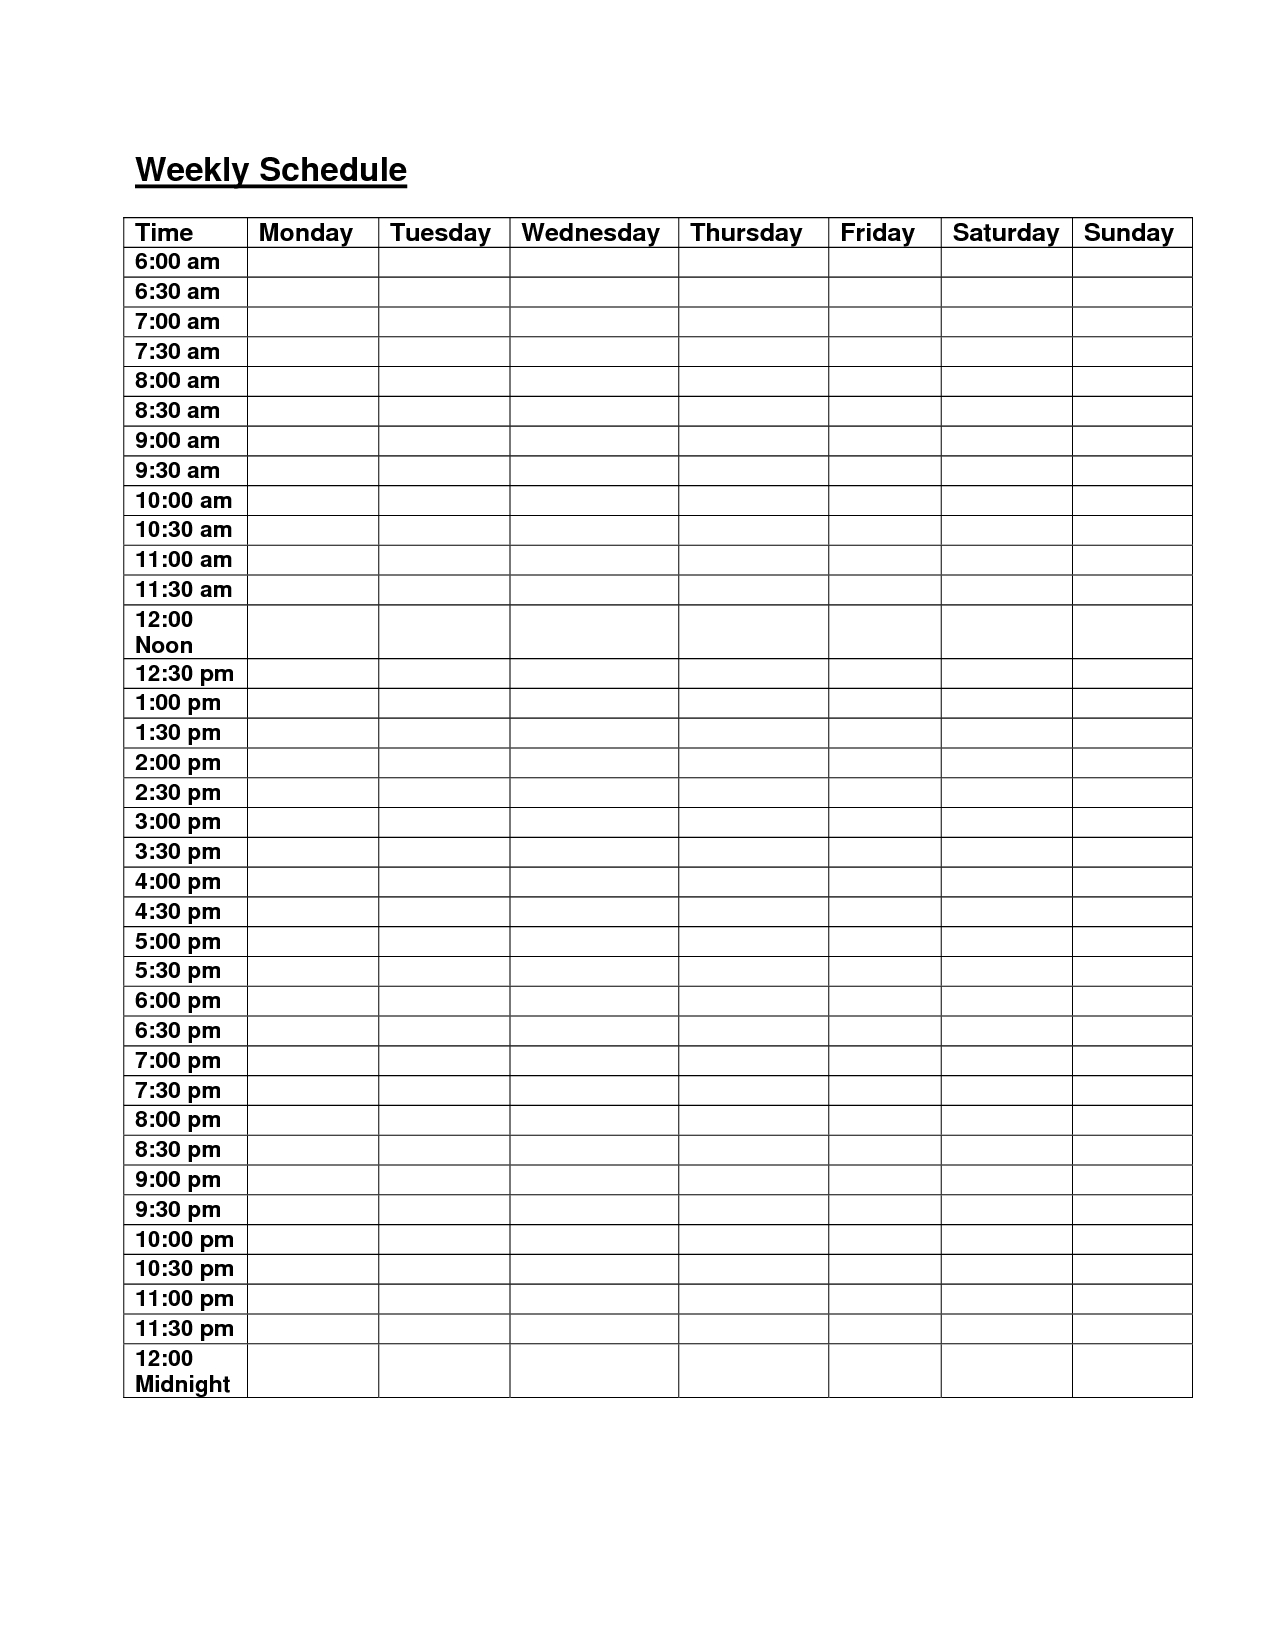 Weekly Activity Schedule Template Excel Monday Friday Qkgmvrjv Diy within Monday Through Friday Activity Schedule